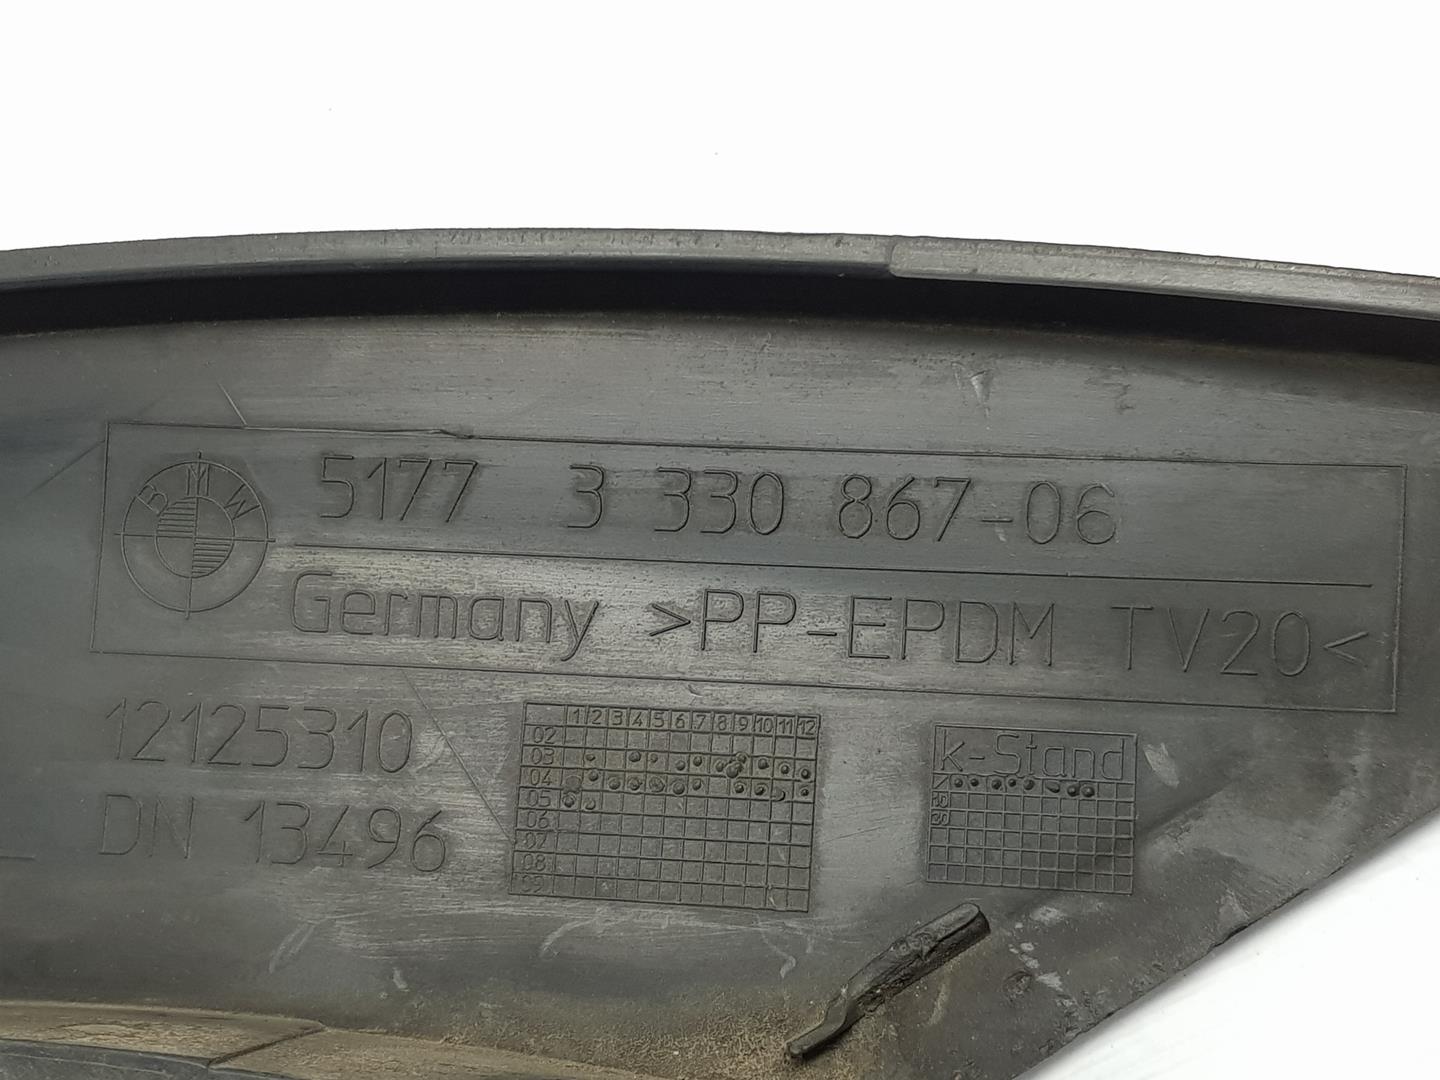 BMW X3 E83 (2003-2010) Rear Left Fender Molding 51713330867, 3330867 21631091